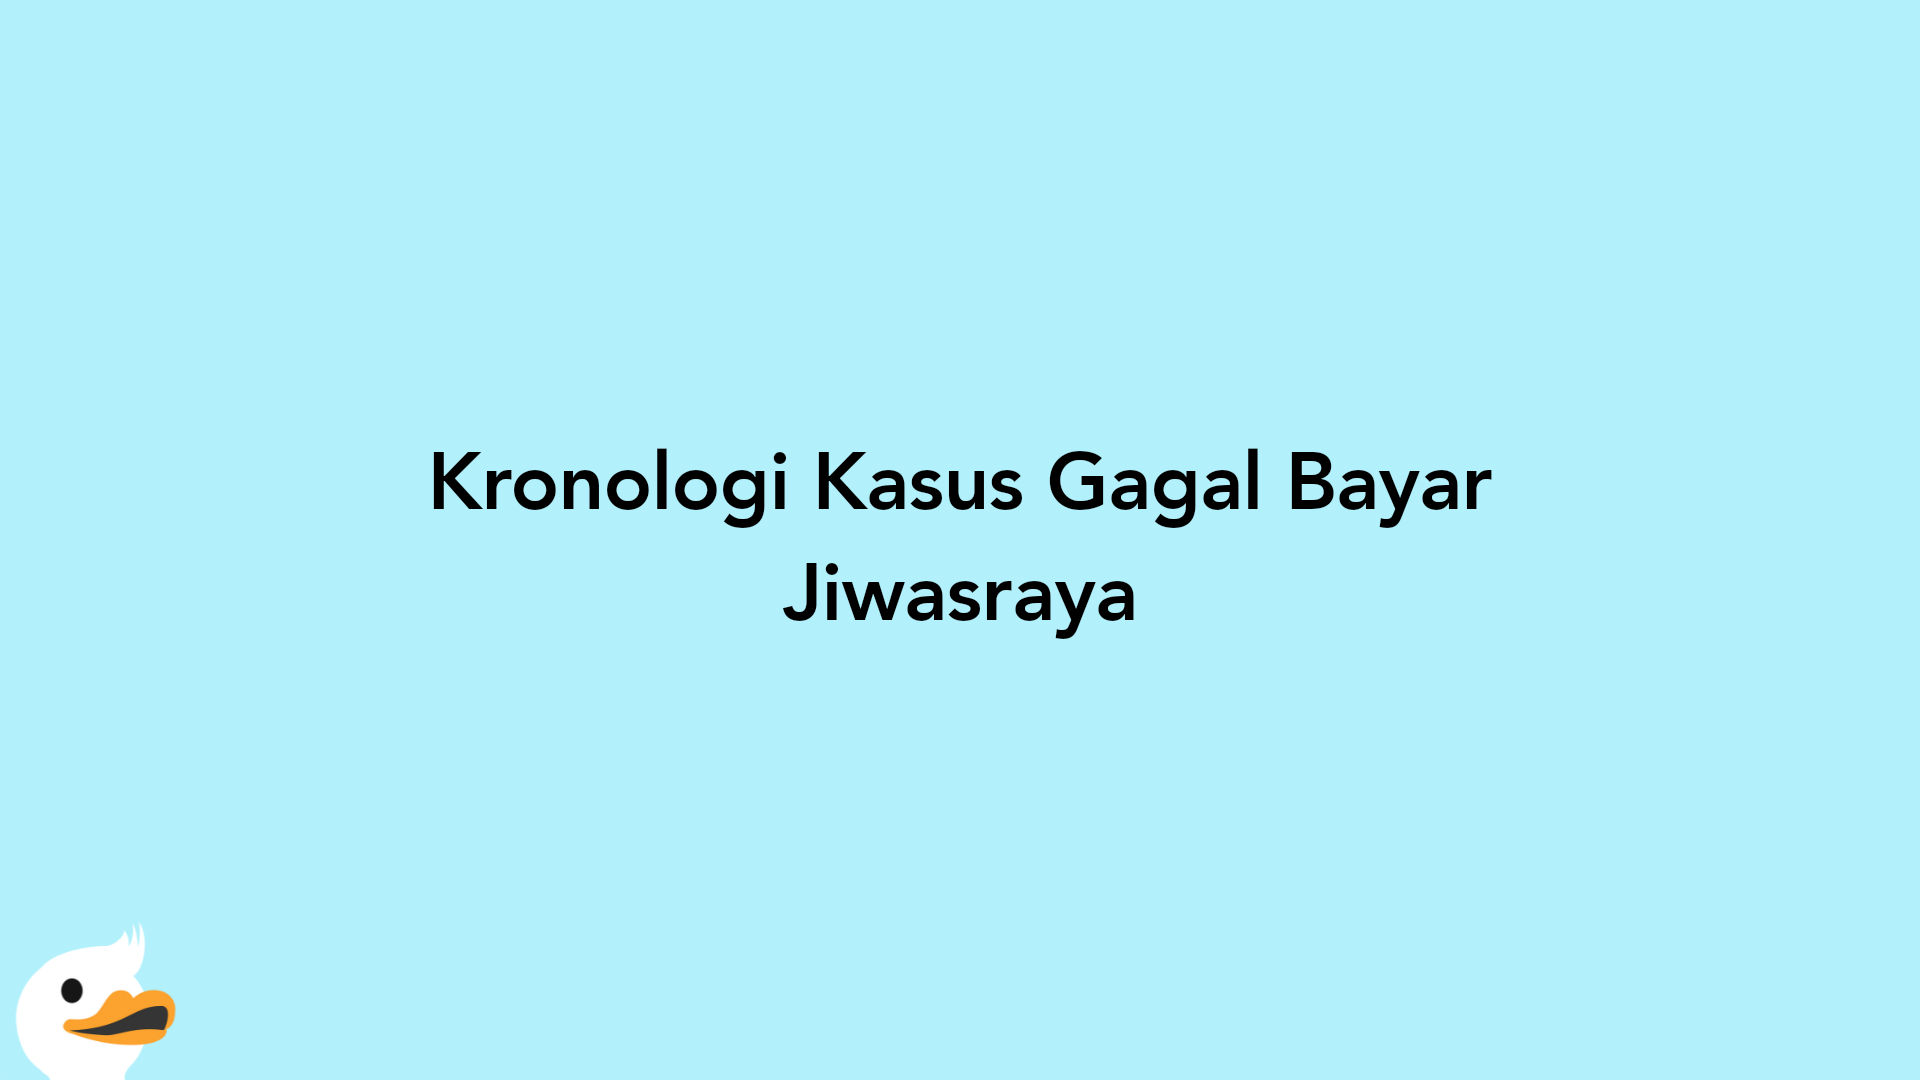 Kronologi Kasus Gagal Bayar Jiwasraya